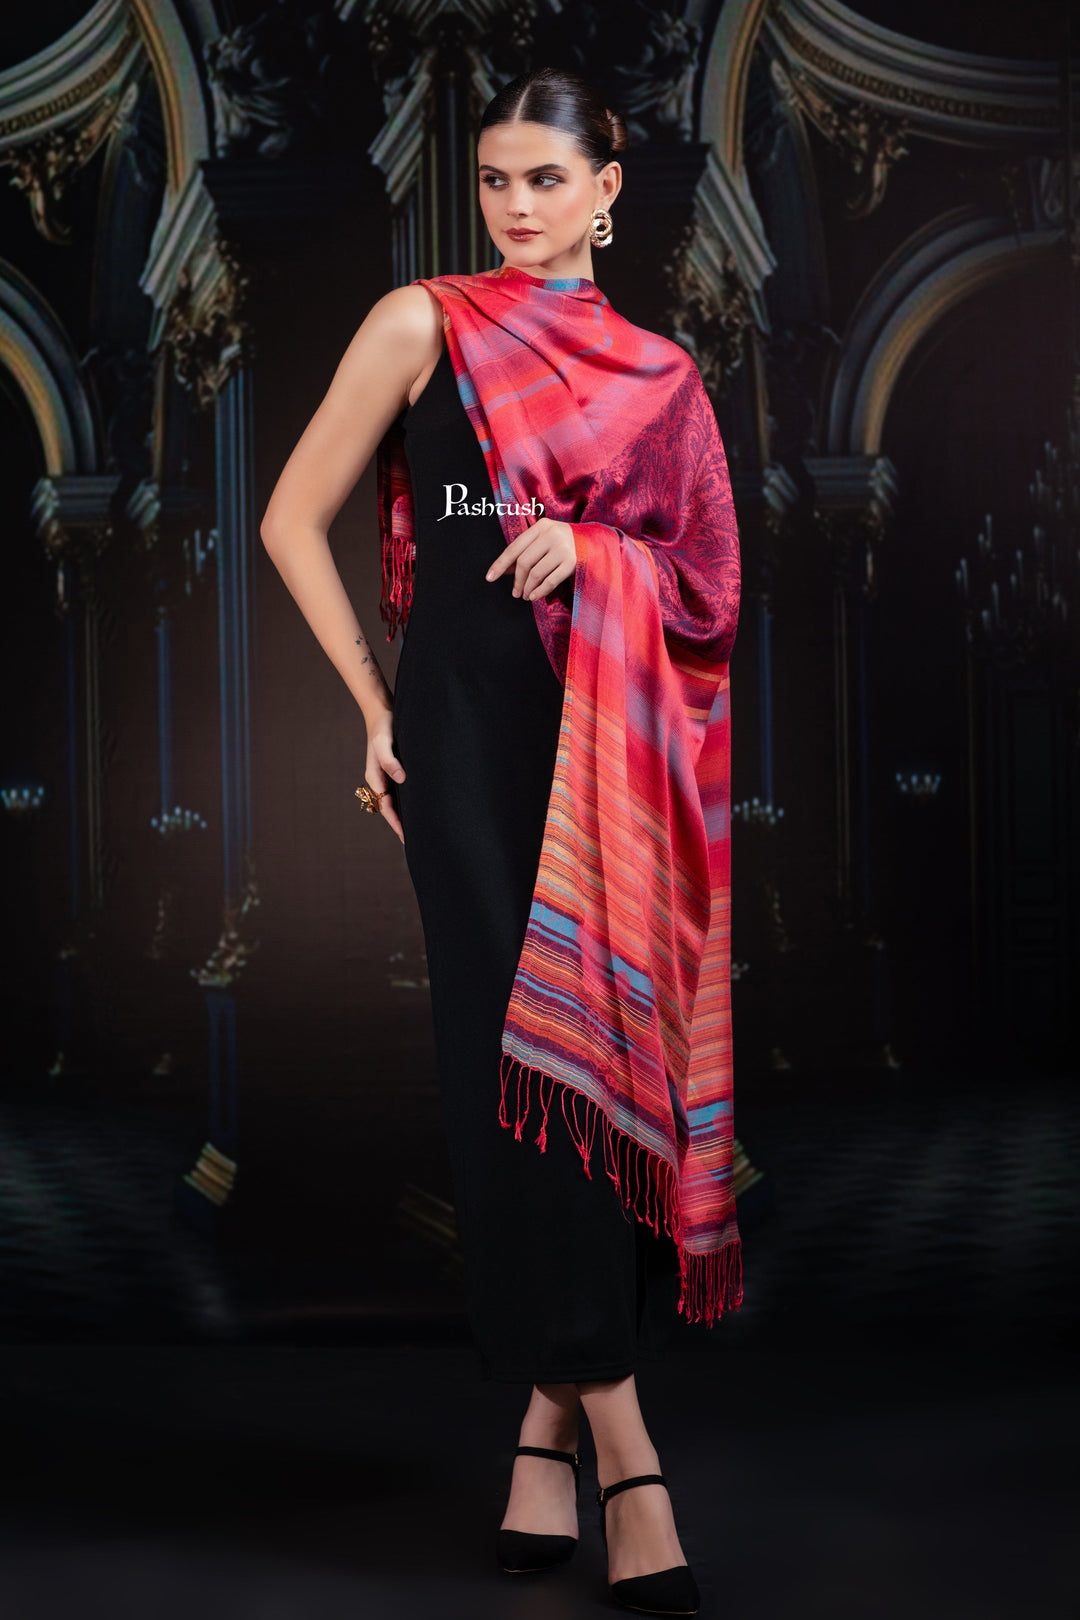 Pashtush India womens scarf and Stoles Pashtush Mens Bamboo Stole, Woven Stripes  Design, Multicolour